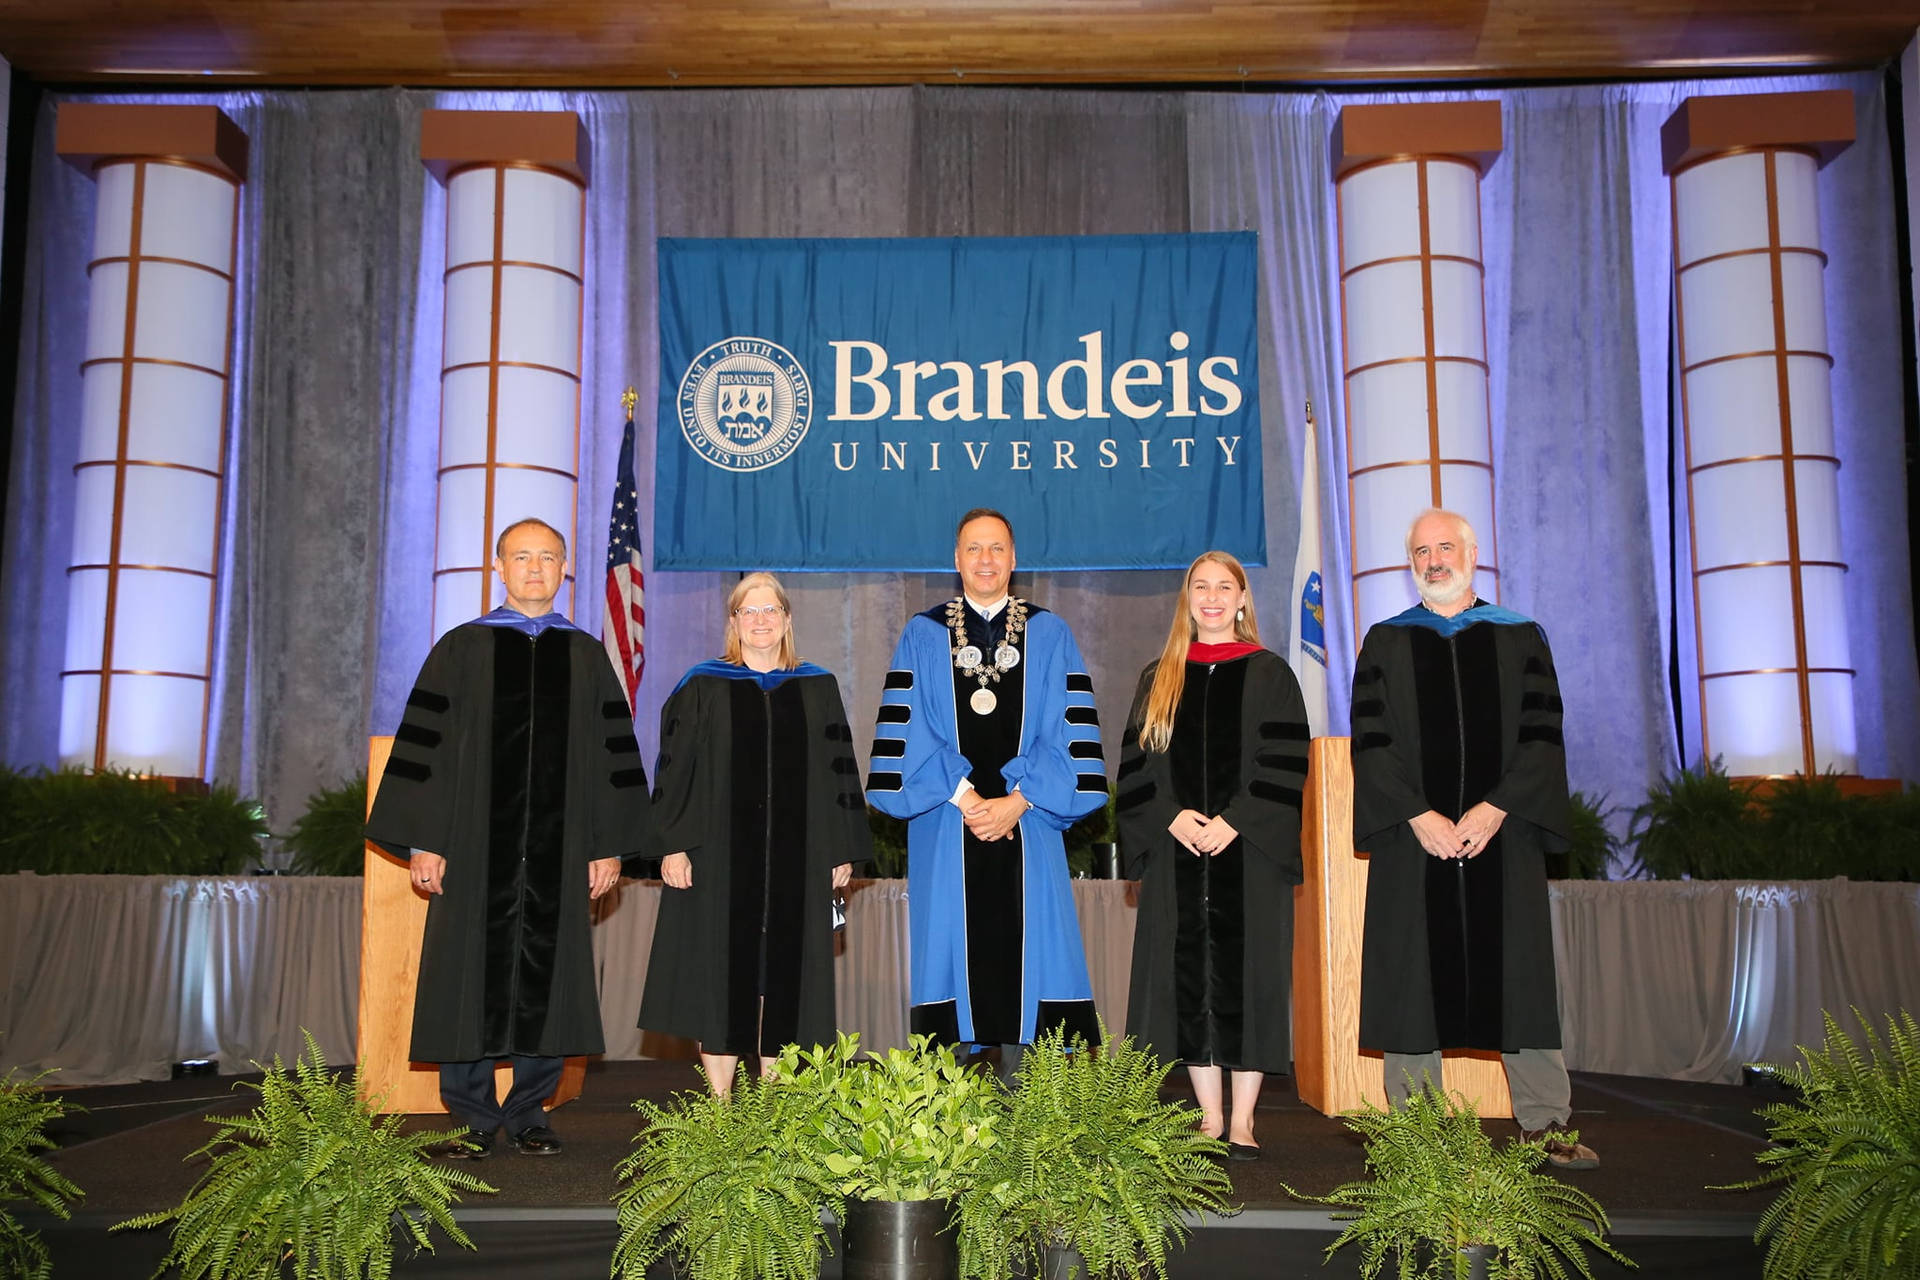 Download Brandeis University Commencement Ceremony Wallpaper